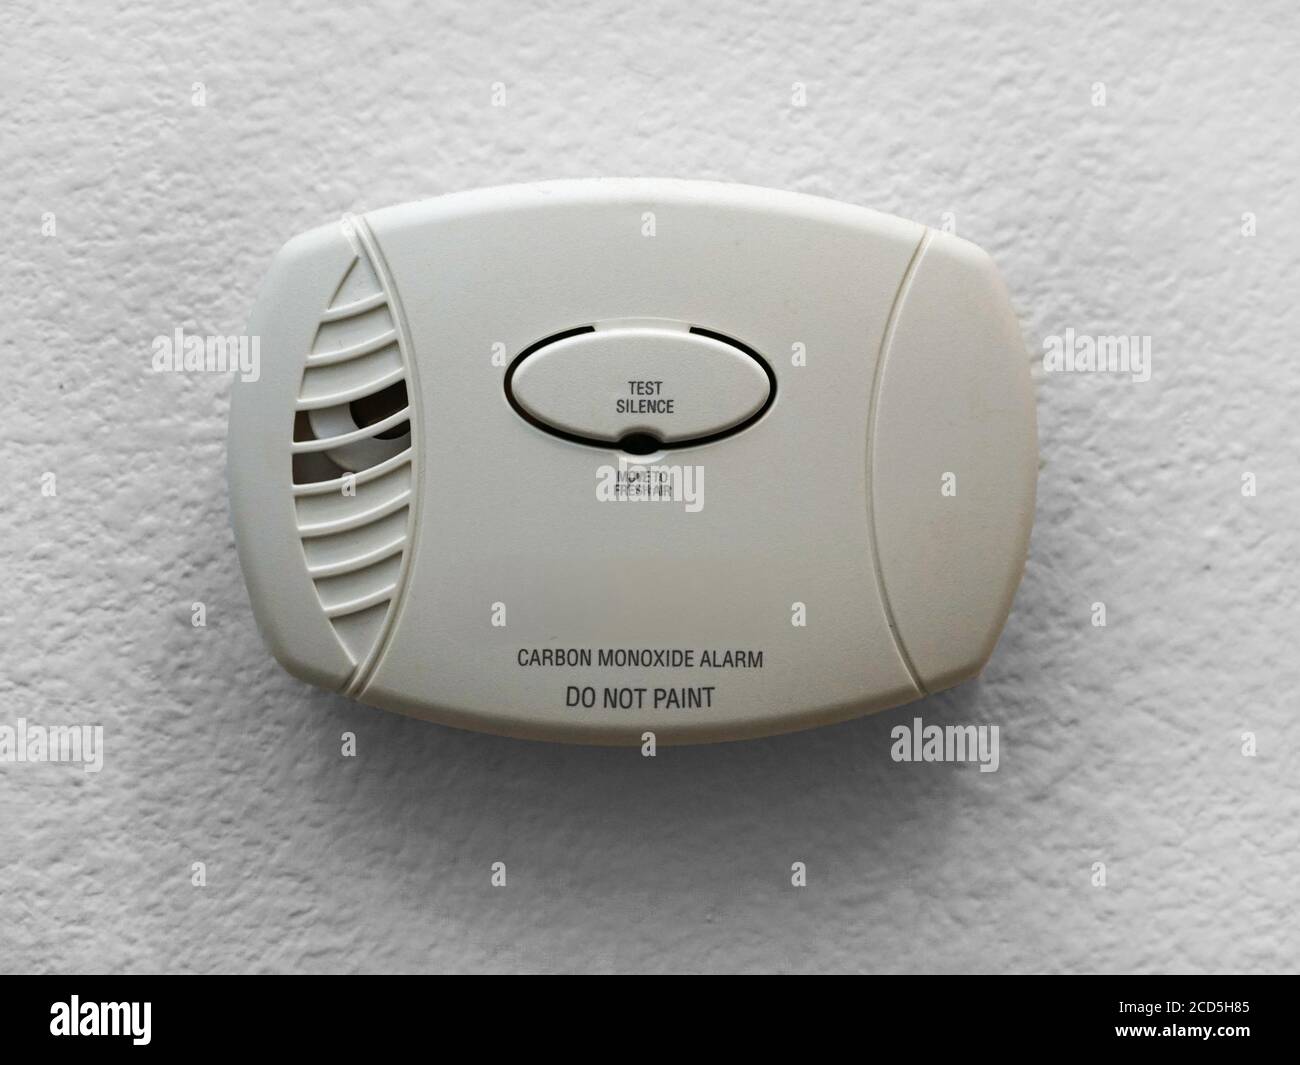 First Alert Wall Mounted Carbon Monoxide Detector